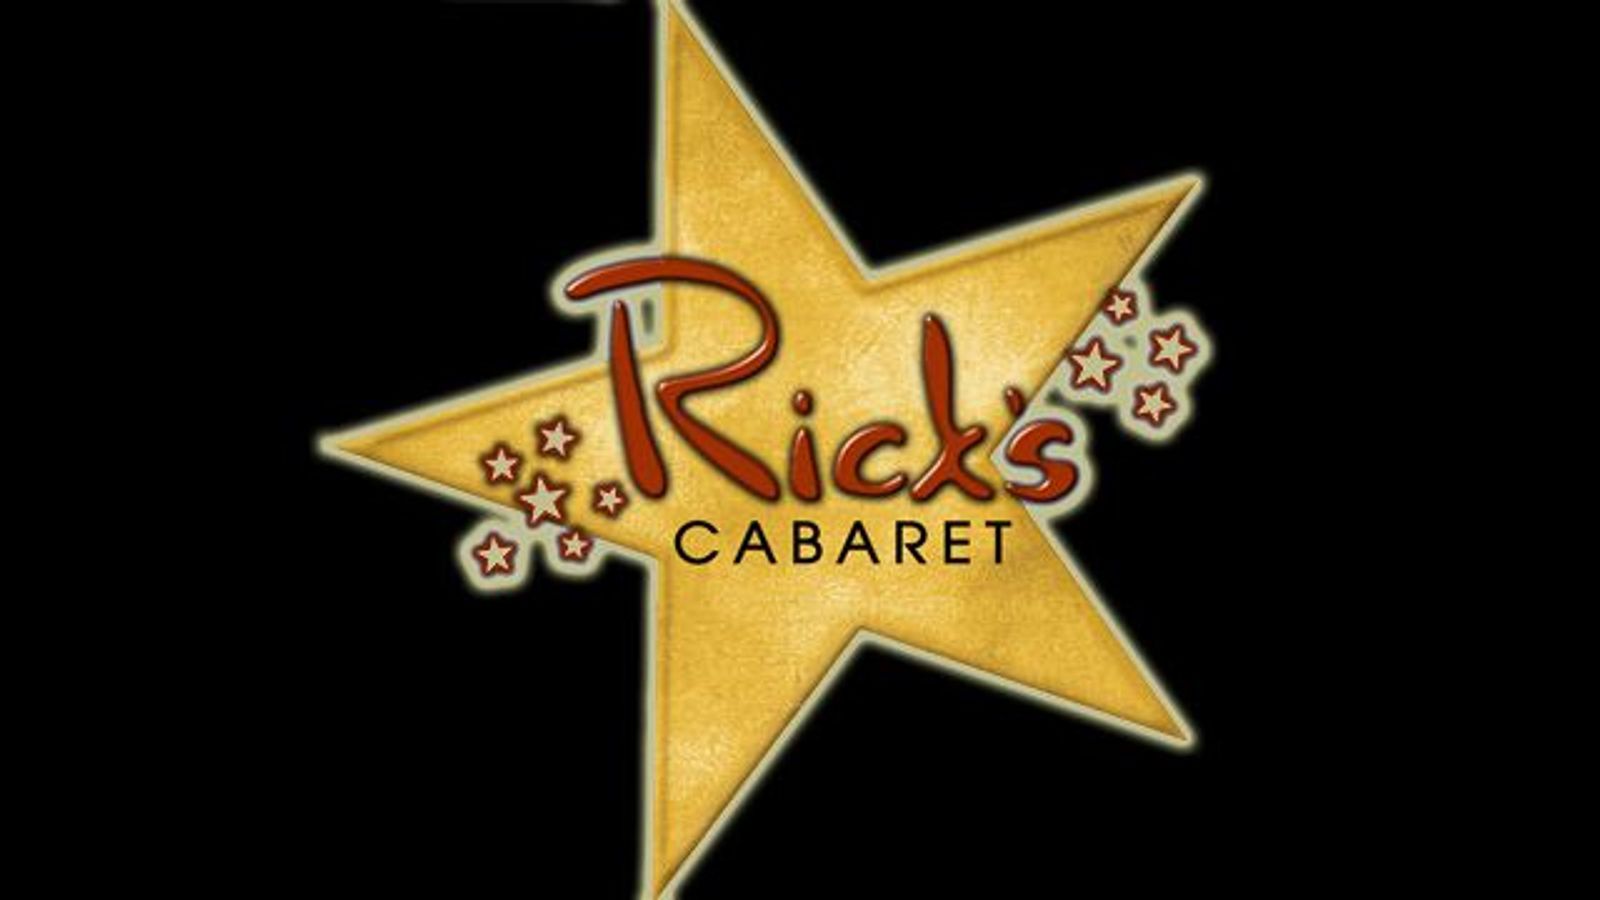 Analyst Says Rick’s Cabaret Stock Worth Twice Its Current Price